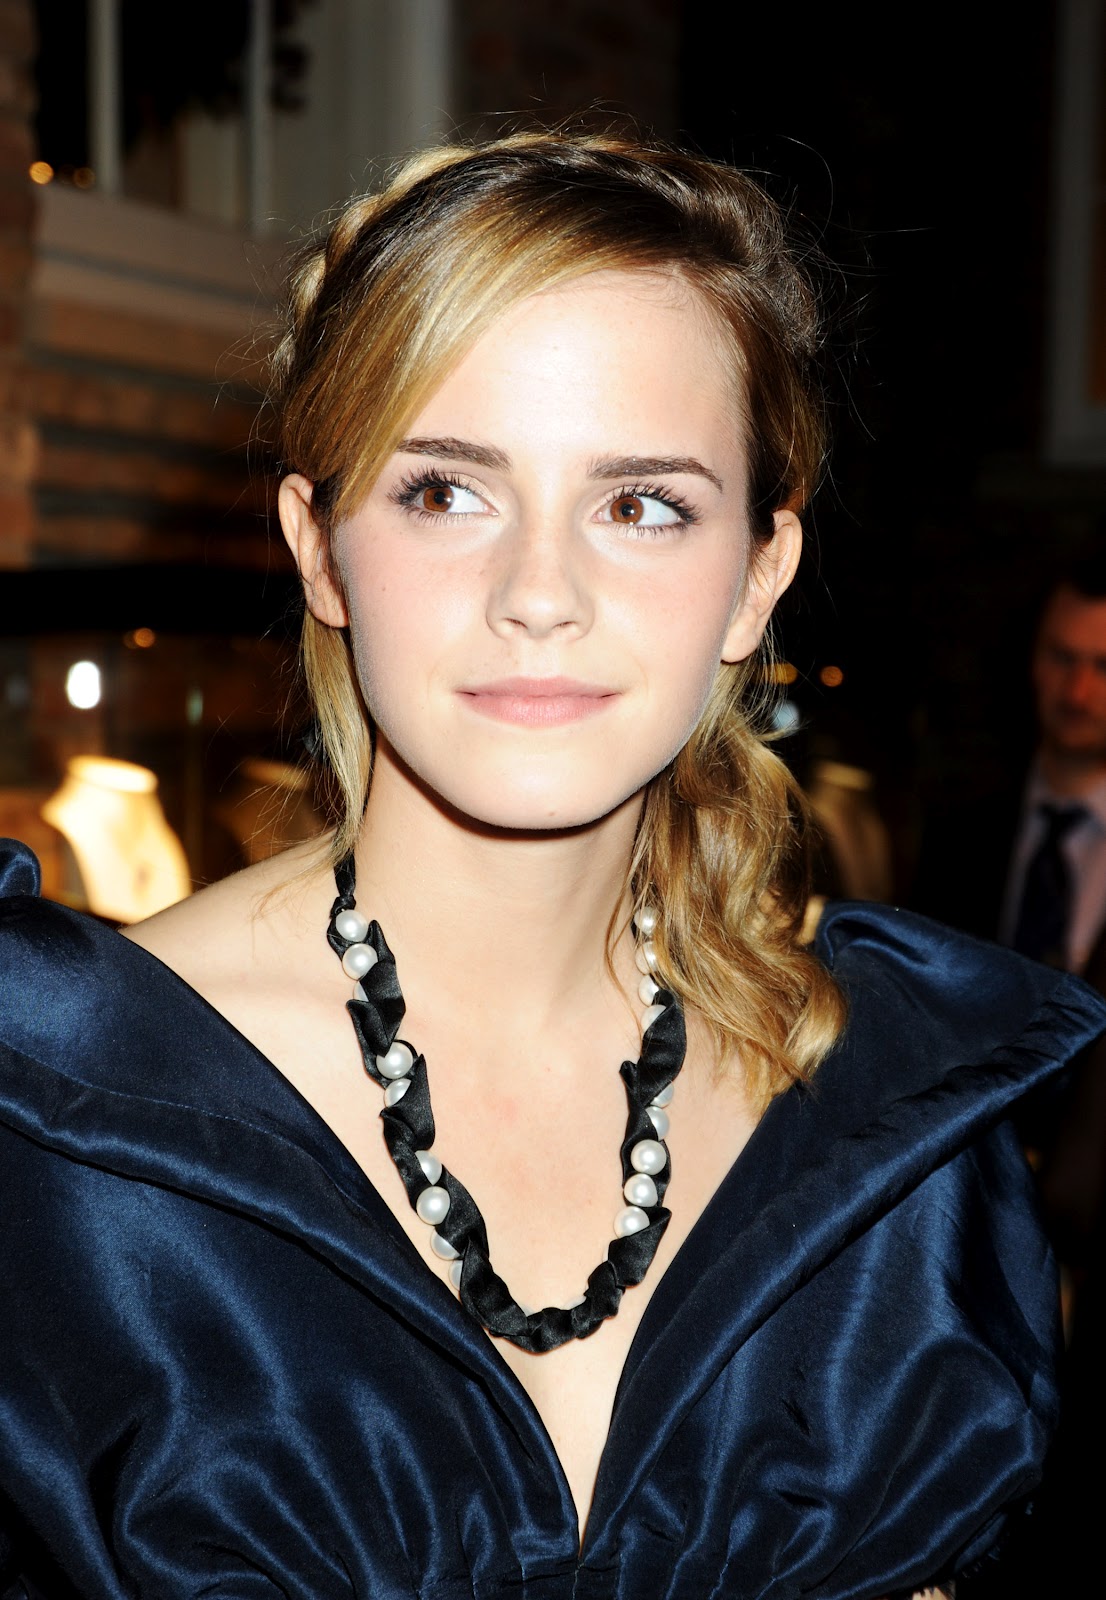 Just4Celebs - fresh links of celebrities: Emma Watson long 